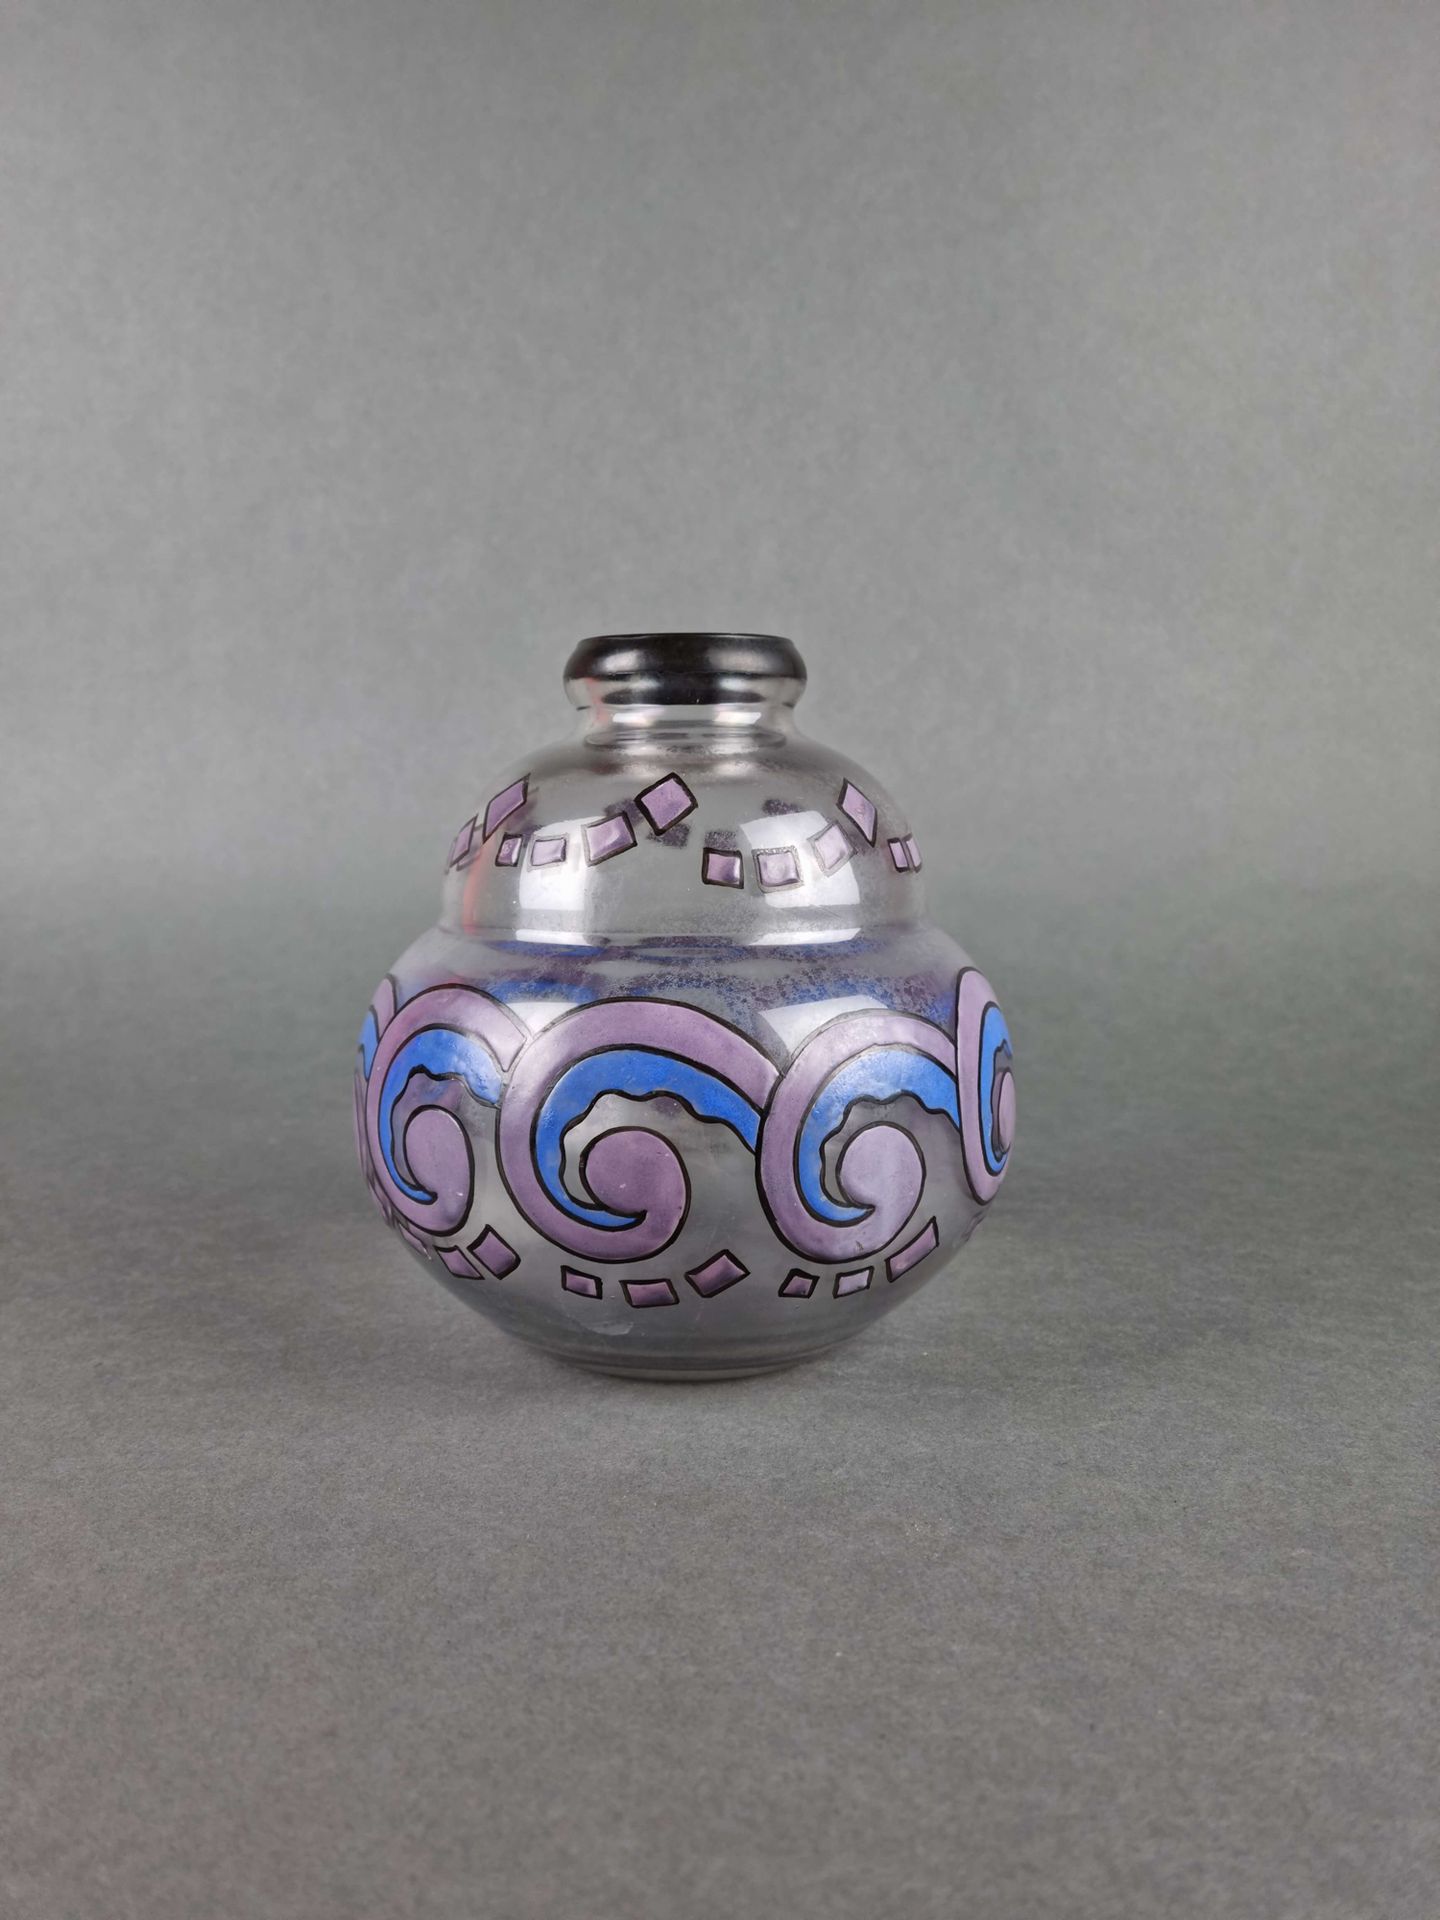 MAIRESSE Léon (1903-1985) 签名为L.Mairesse Vercentre的带几何装饰的花瓶。颈部有伤痕。高：17厘米